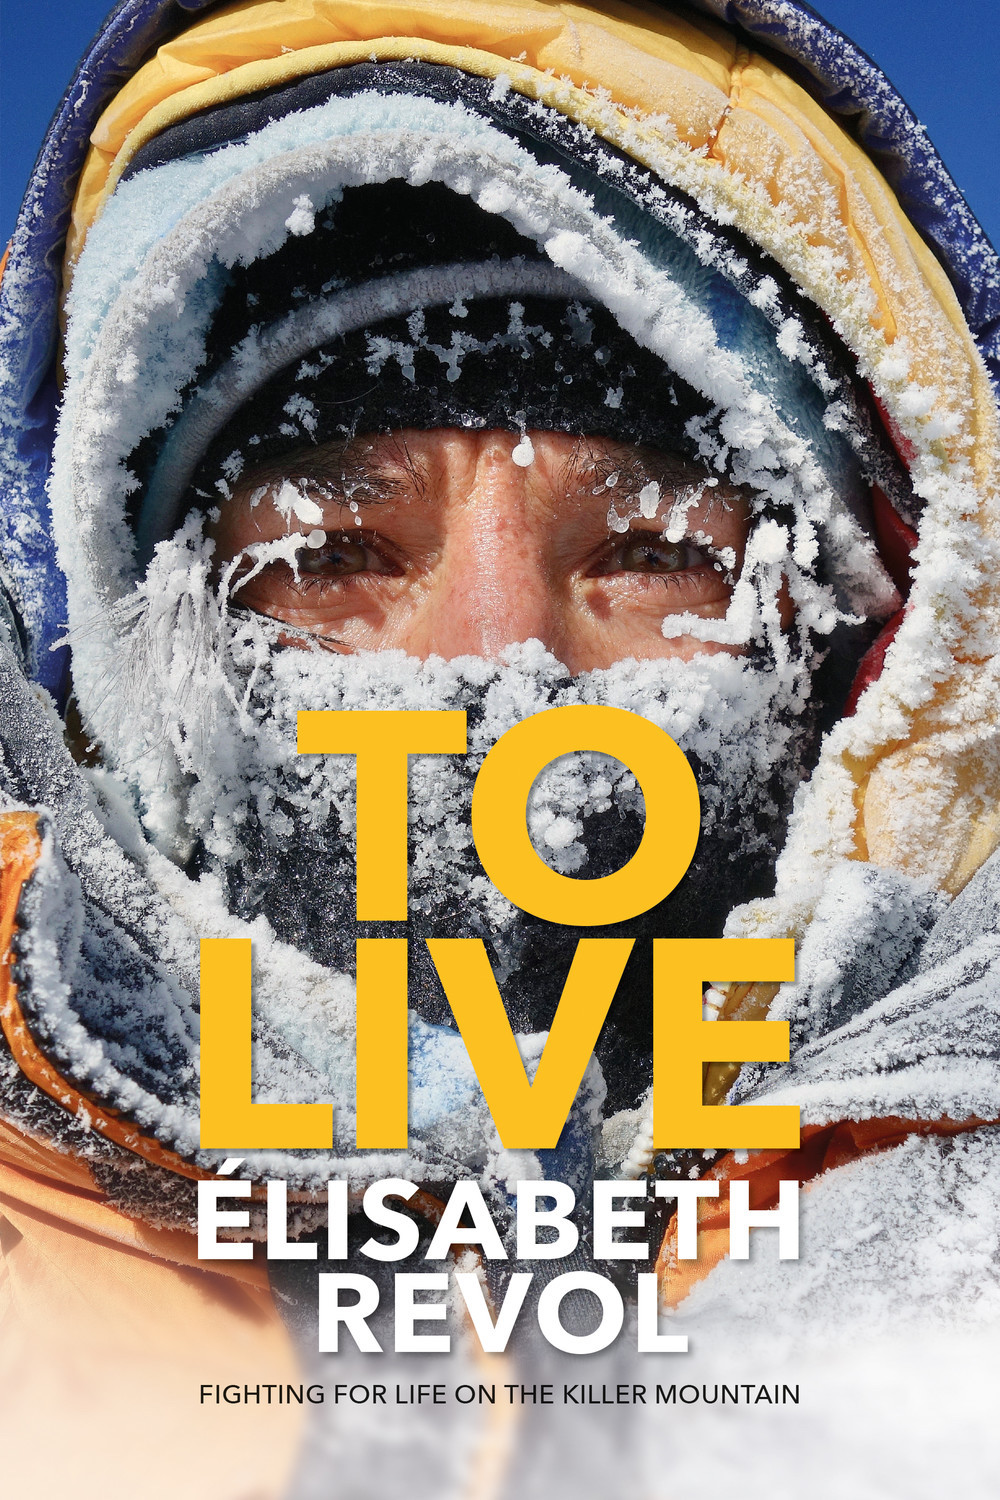 Elisabeth Revol’s book “To Live” is an ode to Tomasz Mackiewicz and Nanga Parbat